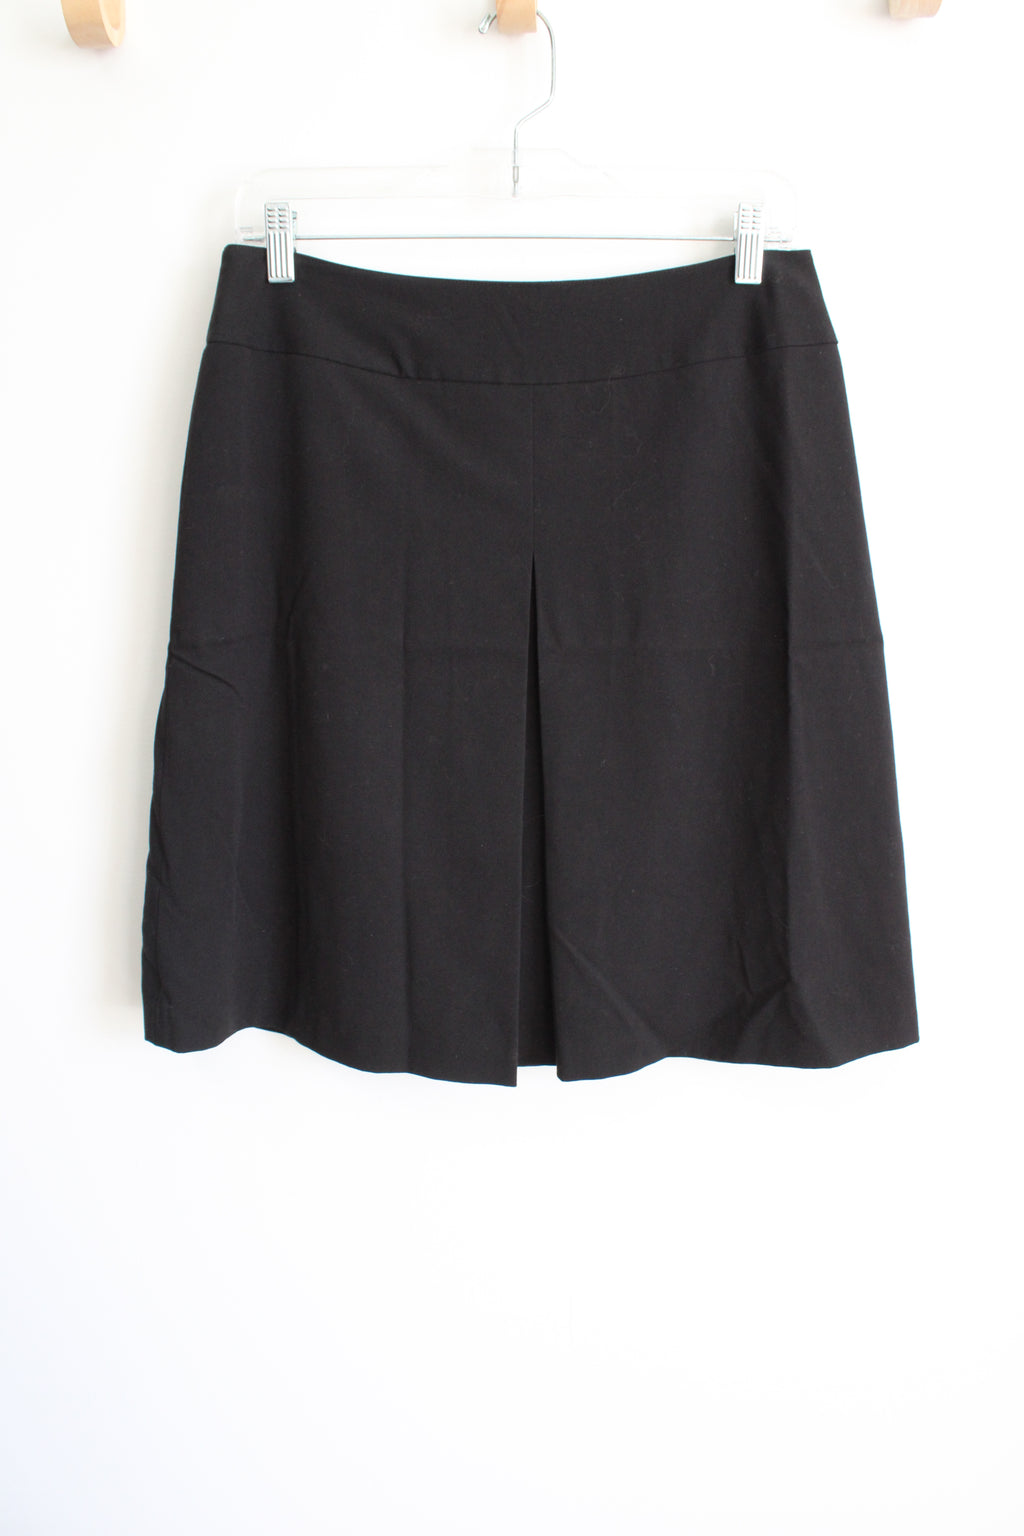 Worthington Works Black Skirt | 10